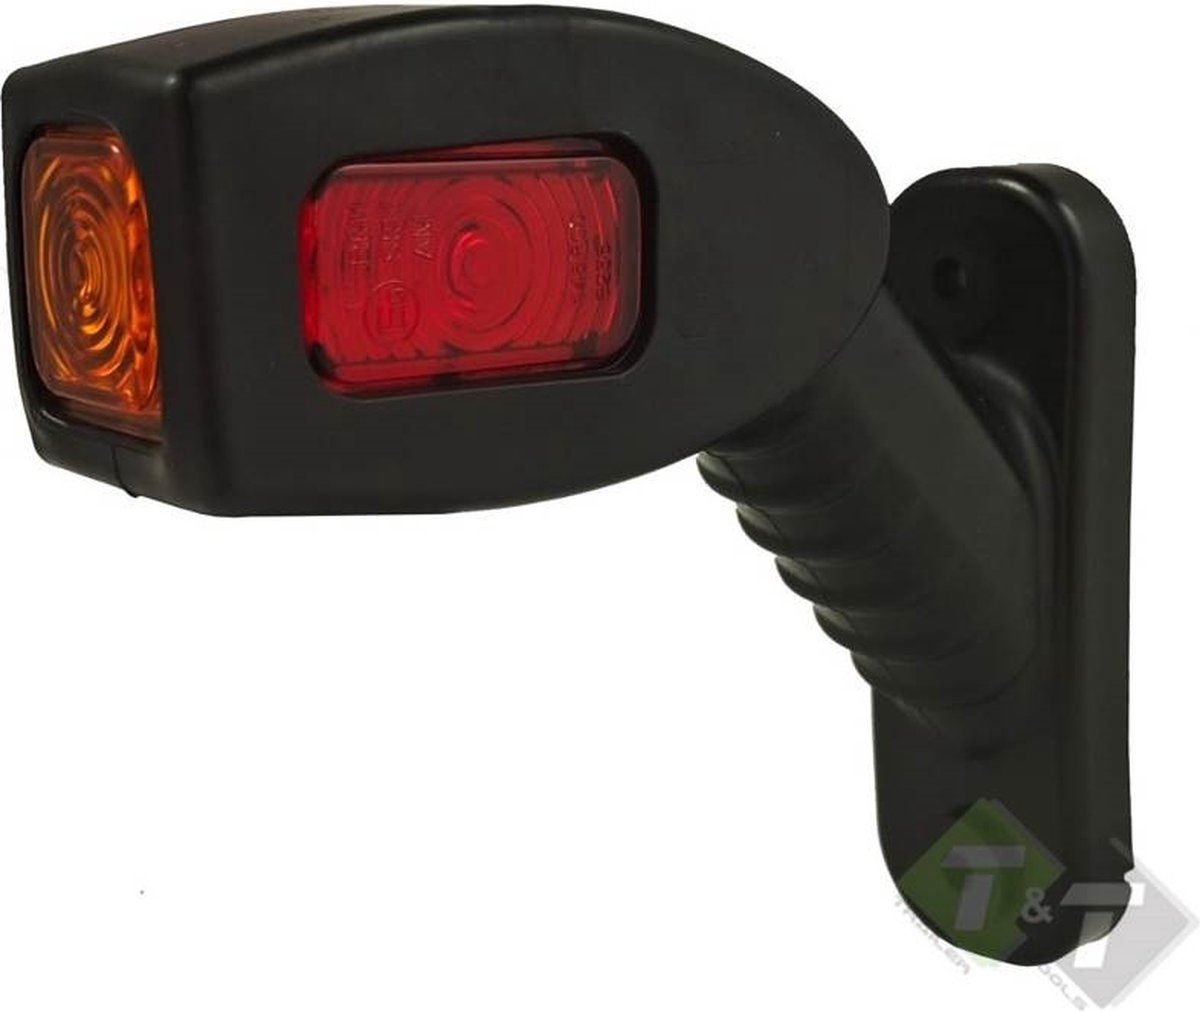 Breedtelamp middel - 3 LEDs - Links - Markeringslamp - Contourlamp